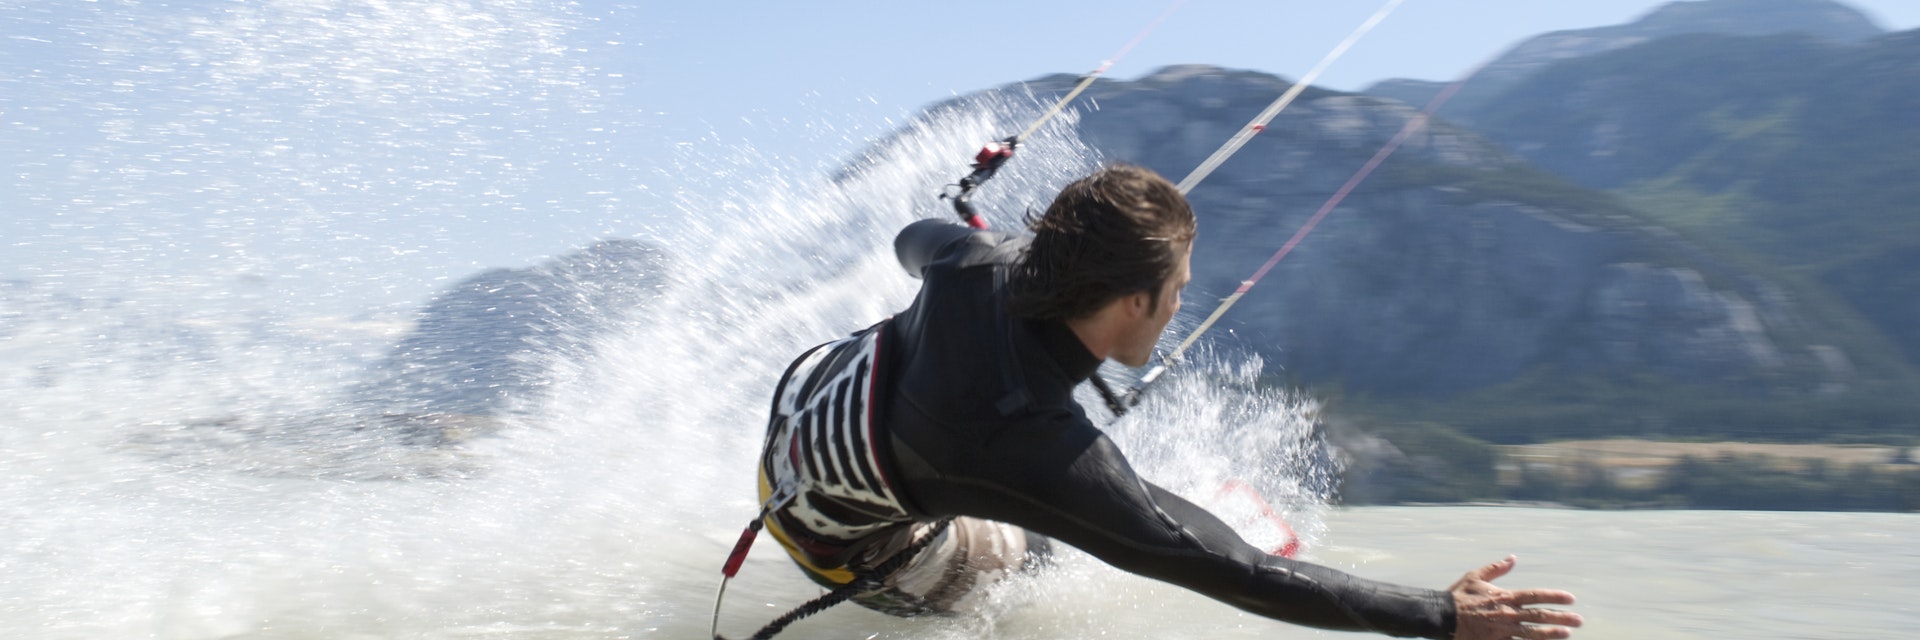 man kiteboarding, on water